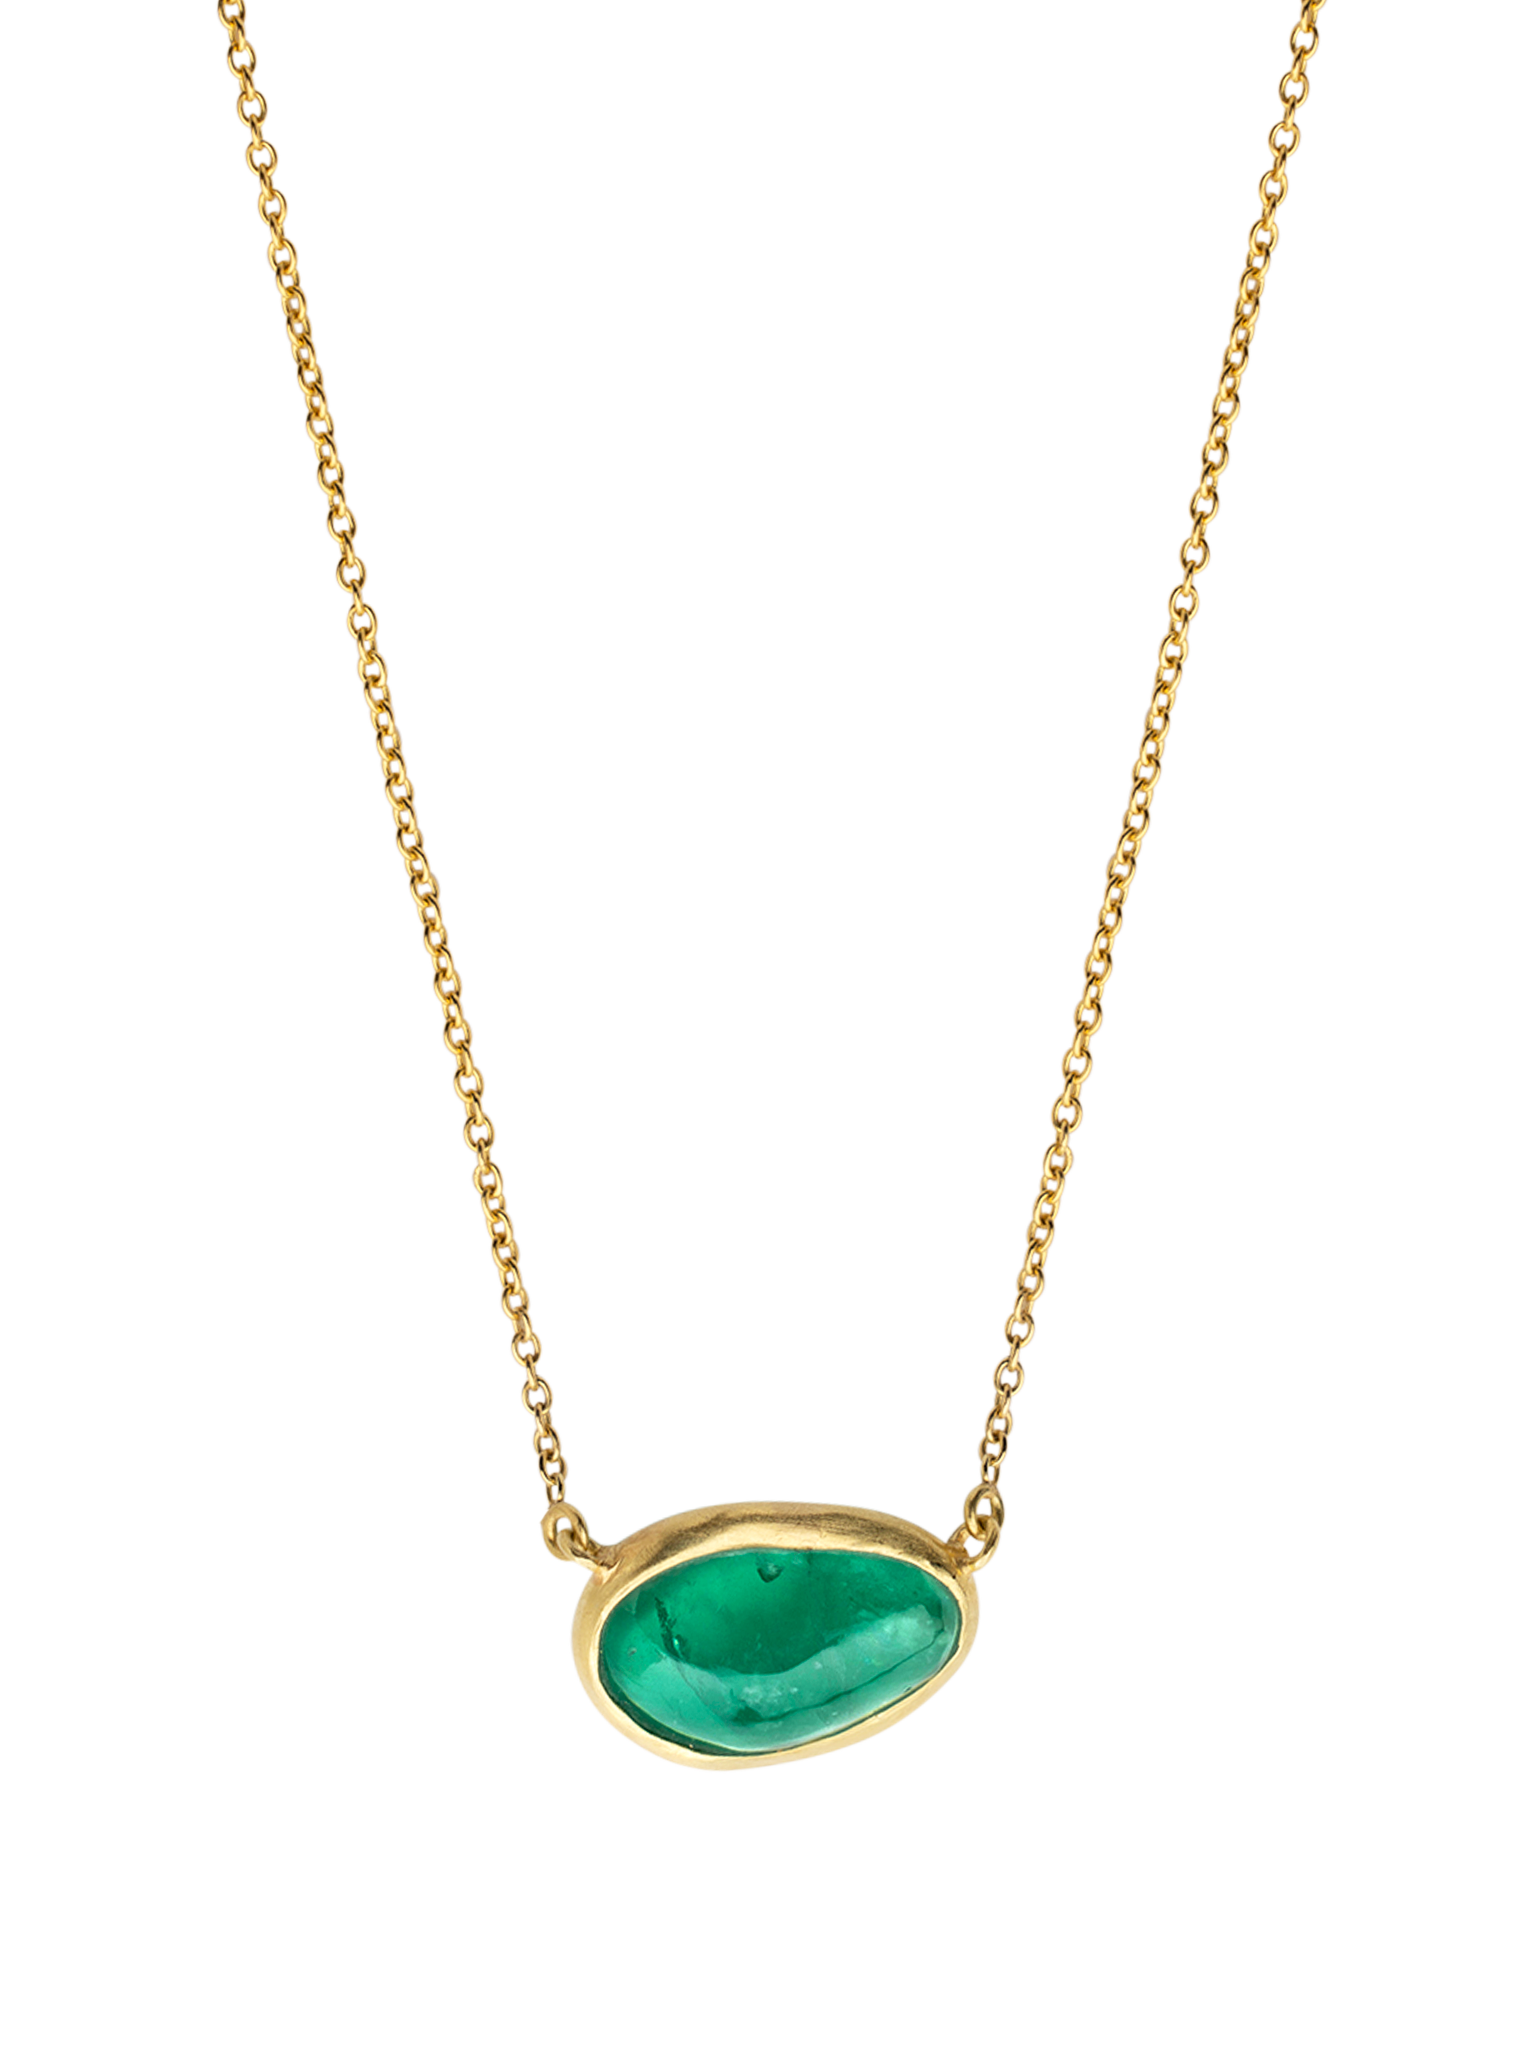 Emerald tumble necklace